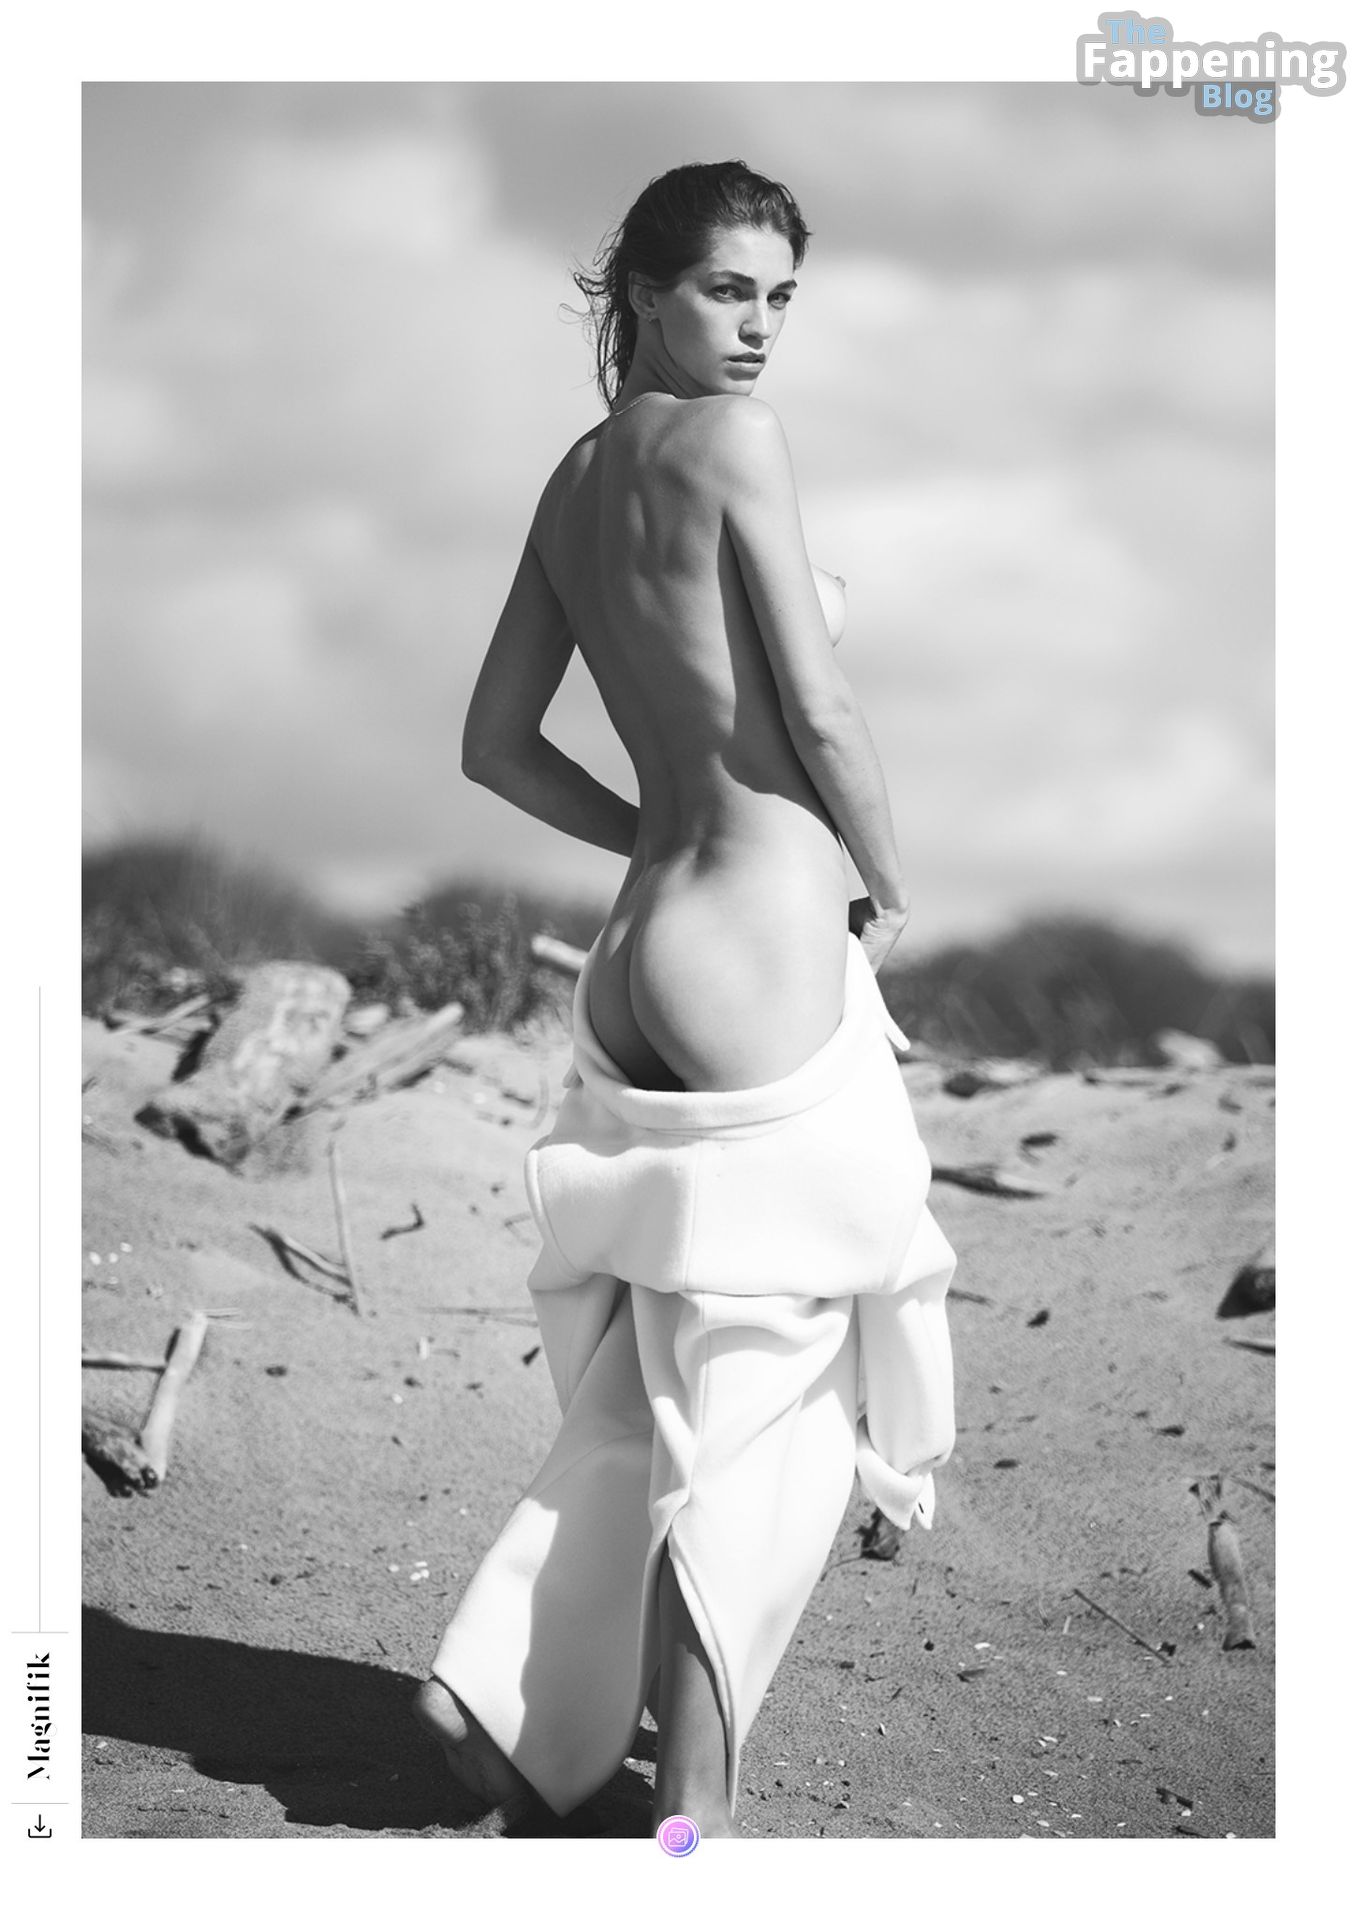 Samantha-Gradoville-Nude-22-The-Fappening-Blog.jpg